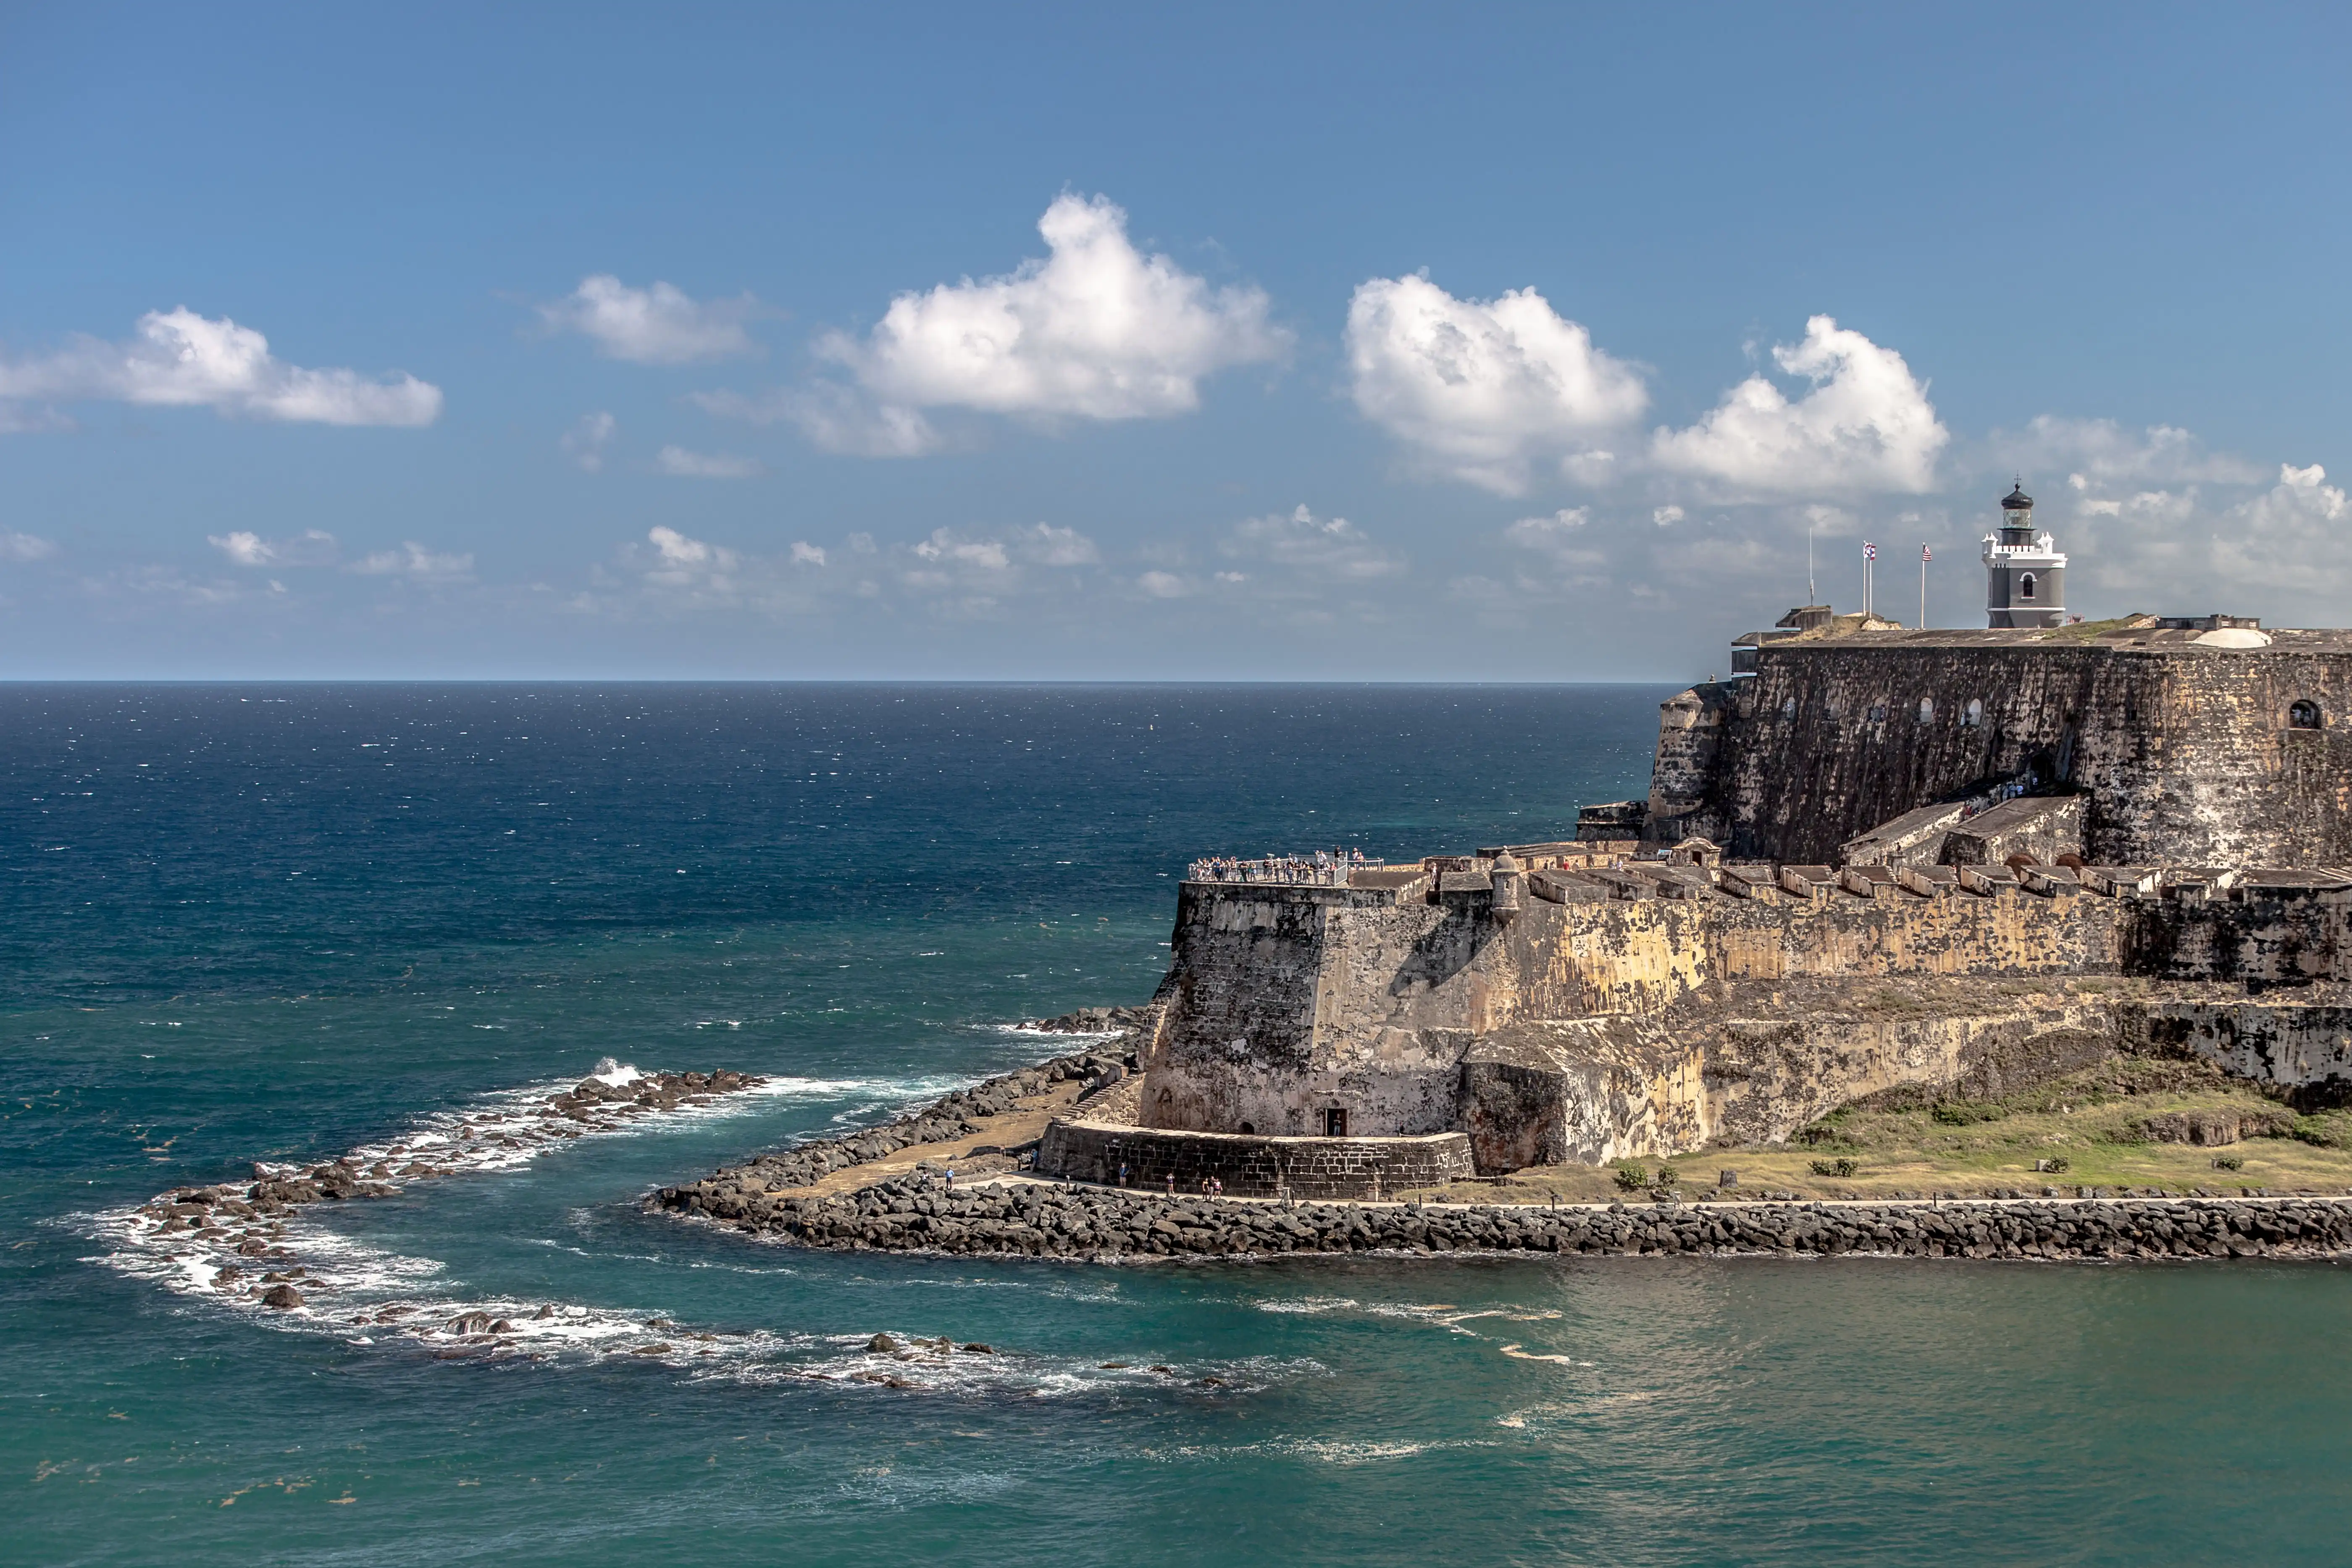 Puerto Rico tourism